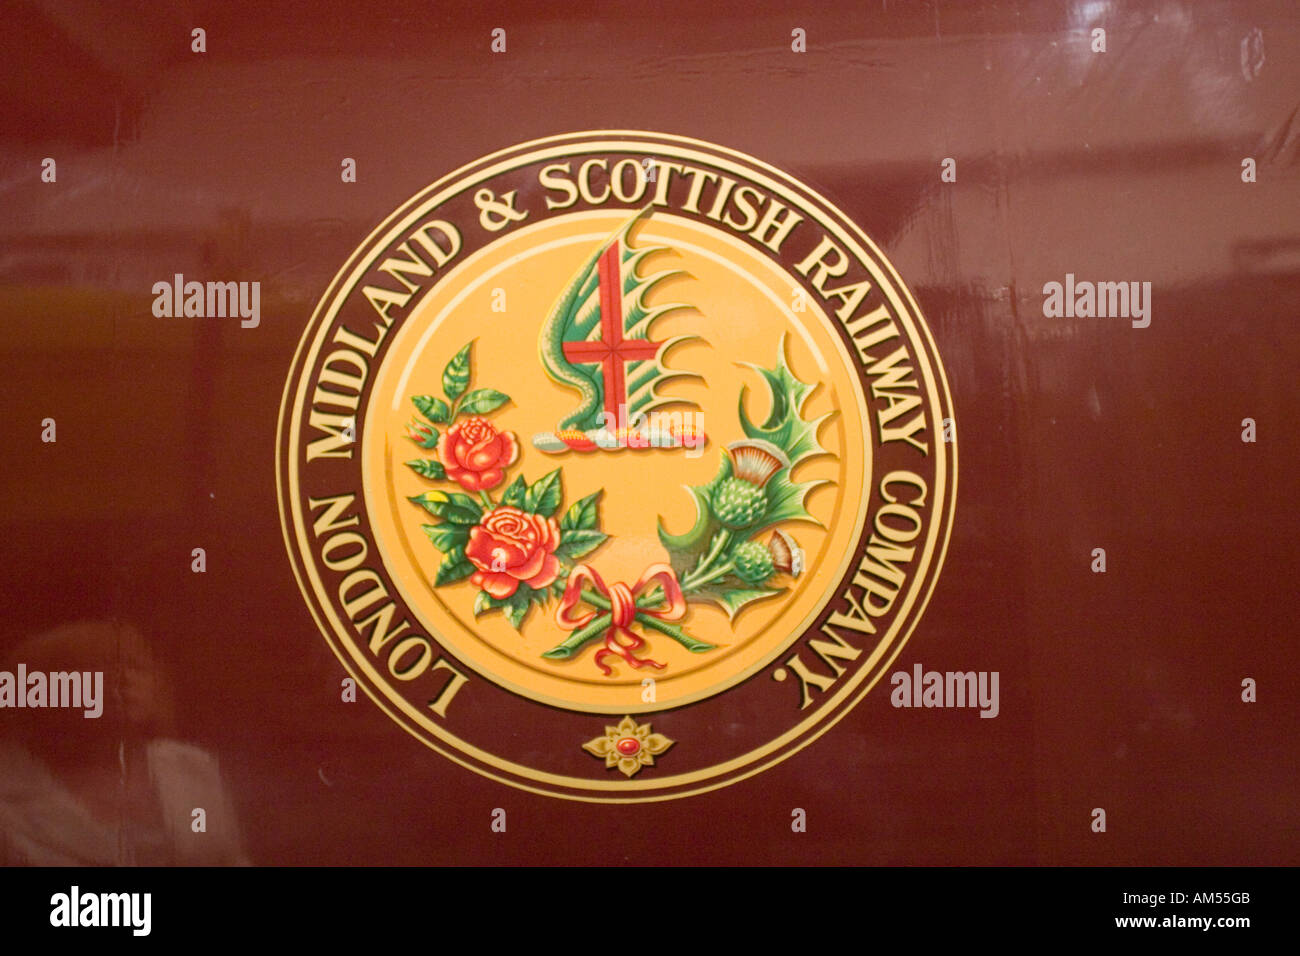 London Midland and Scottish Railway sign the Museum of Transport Glasgow Scotland UK Stock Photo